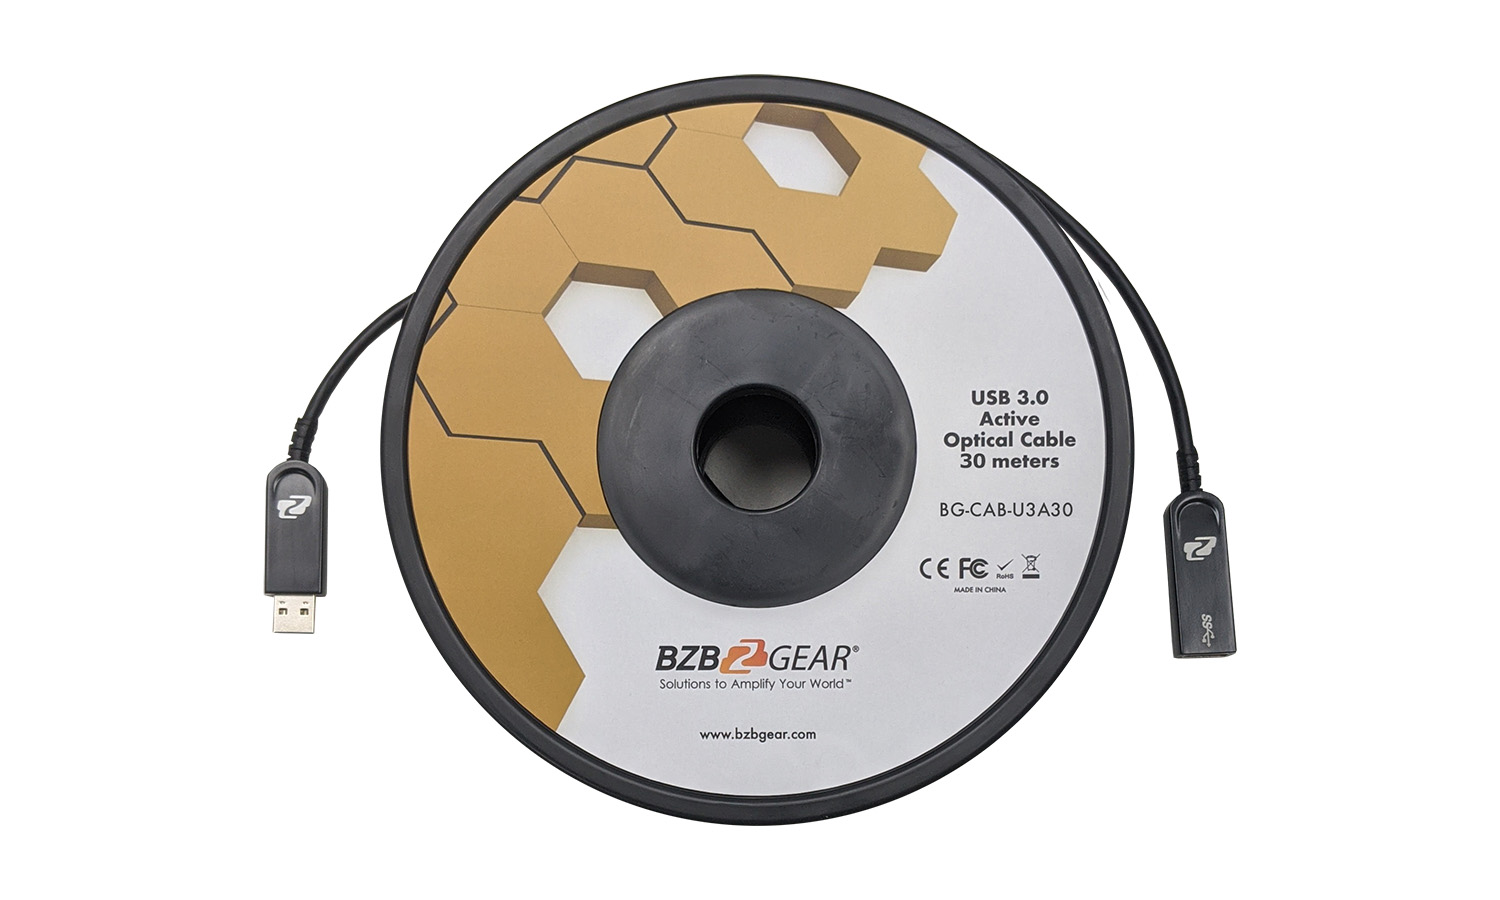 BG-CAB-U3A30 USB 3.0 AM/AF Active Optical Extension Cable - 30m/100ft by BZBGEAR